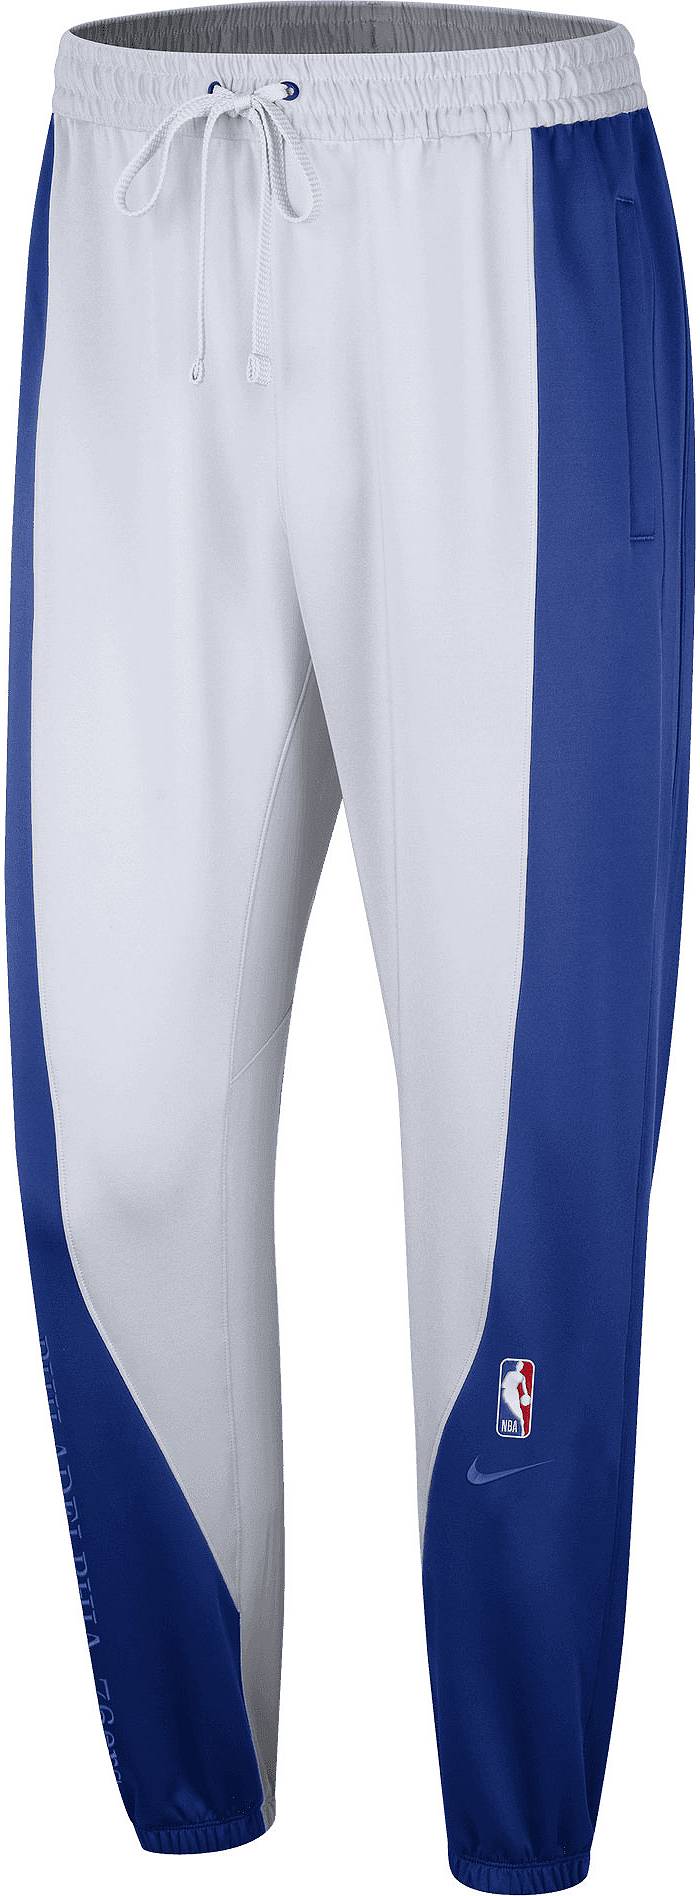 Nike Men's Philadelphia 76ers Tyrese Maxey #0 Blue Dri-Fit Swingman Jersey, XL